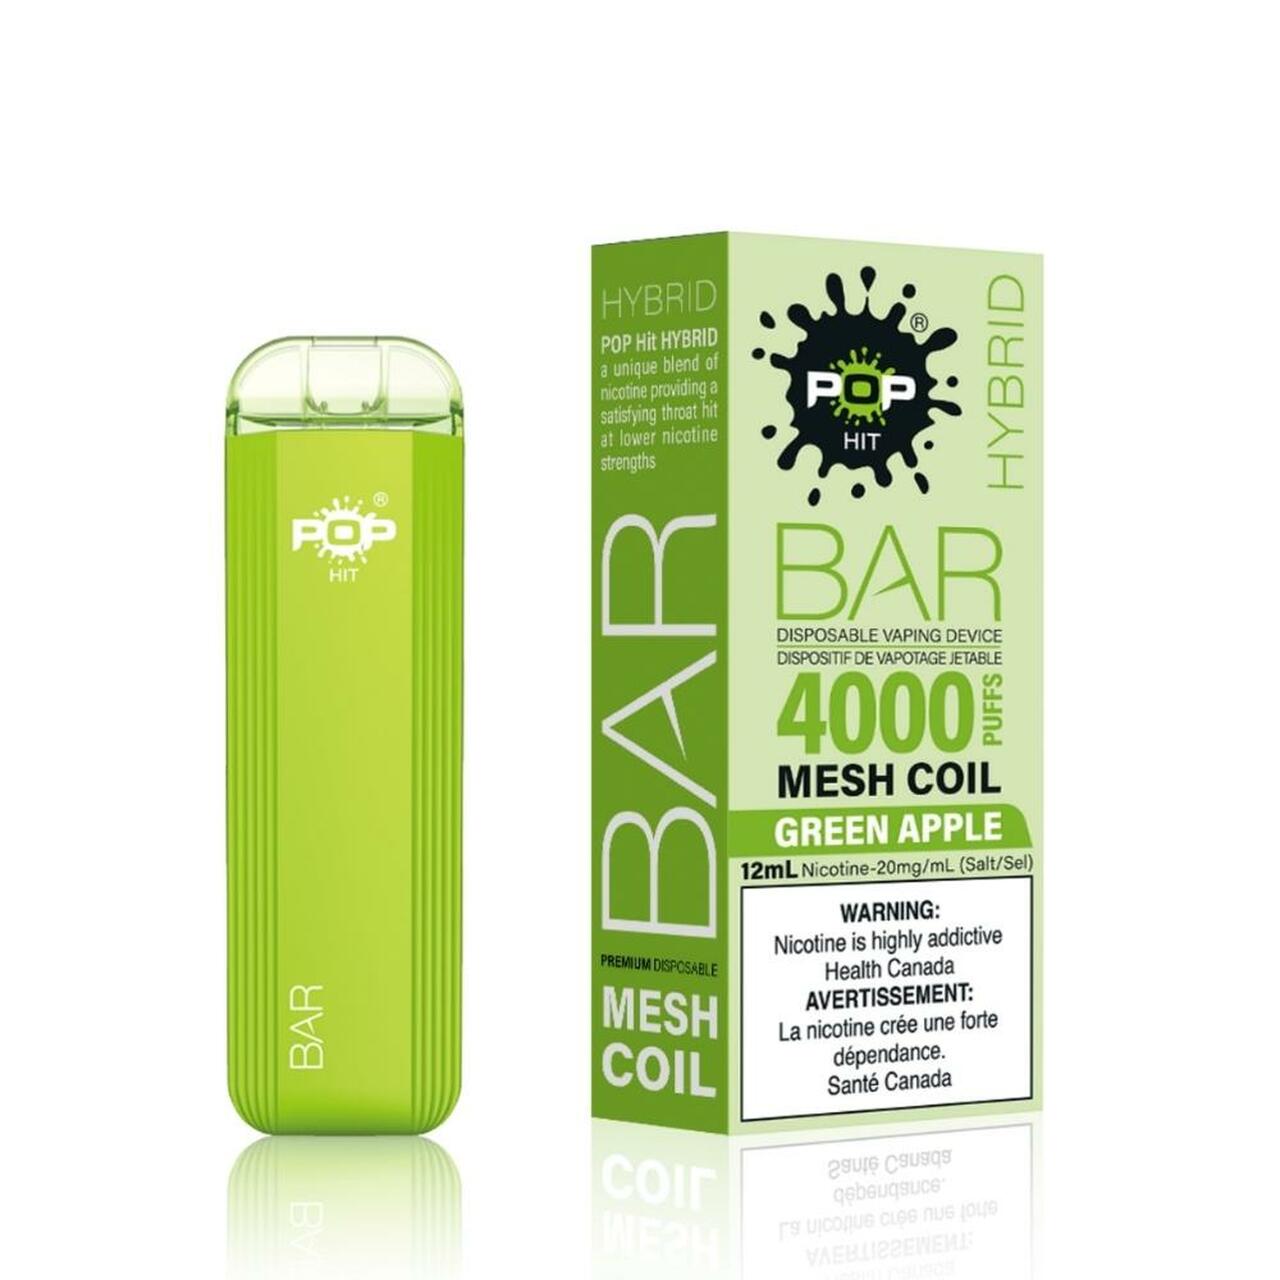 Green Apple - Pop Hybrid Bar 4000 Puff  - 5pc/Carton